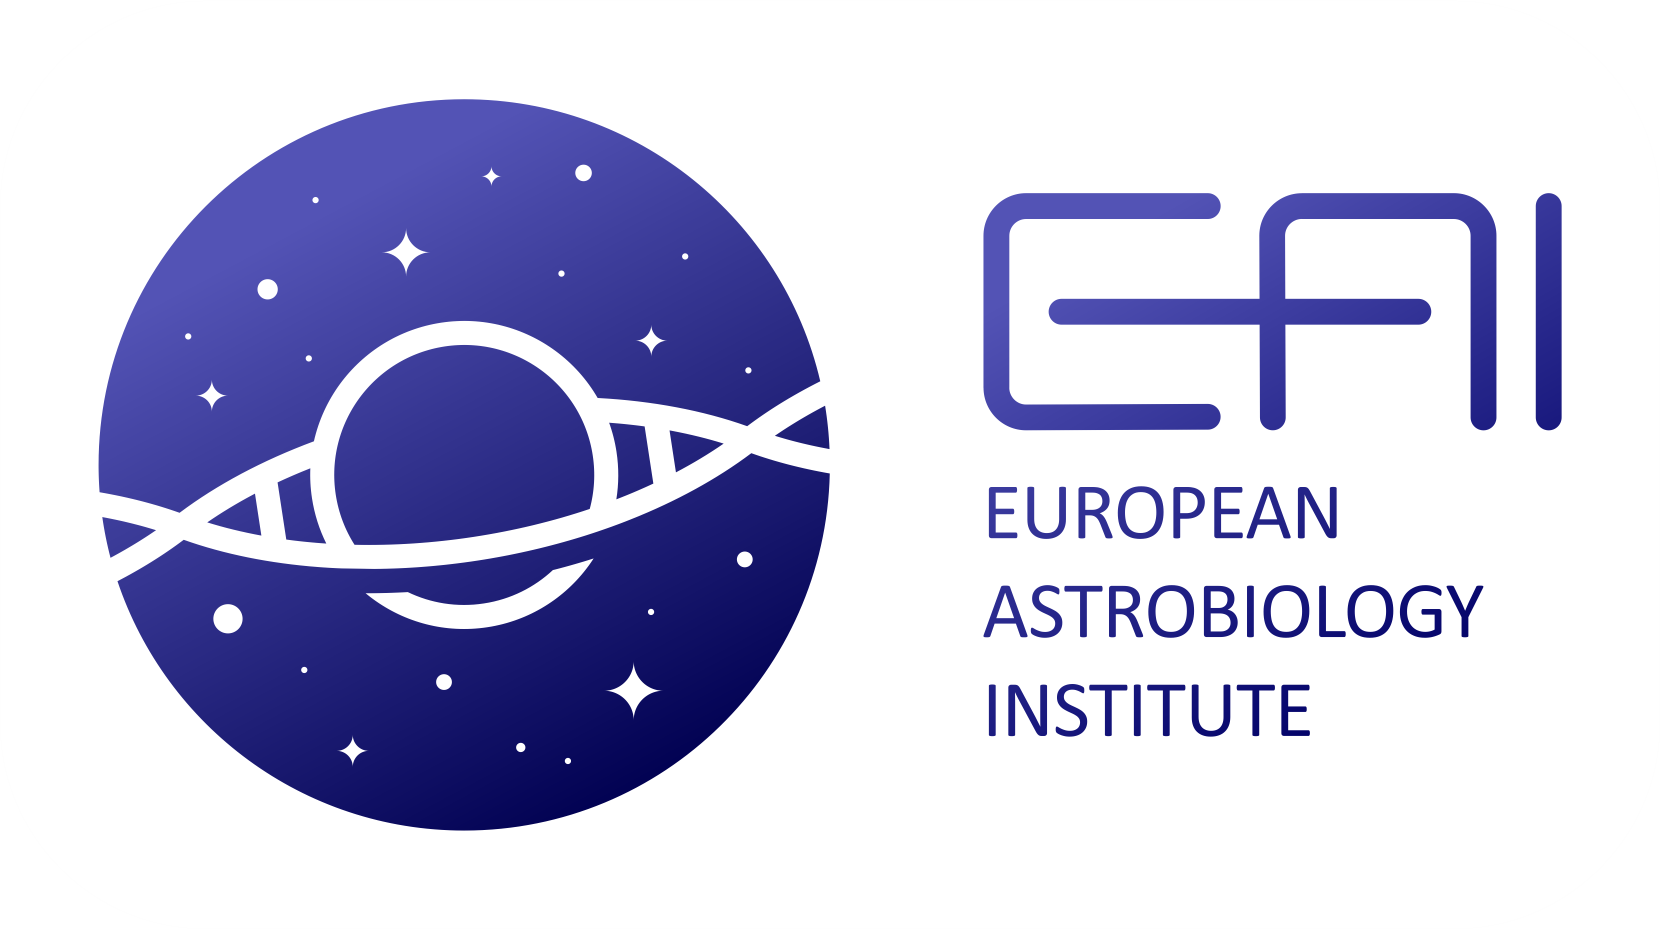 European Astrobiology Institute